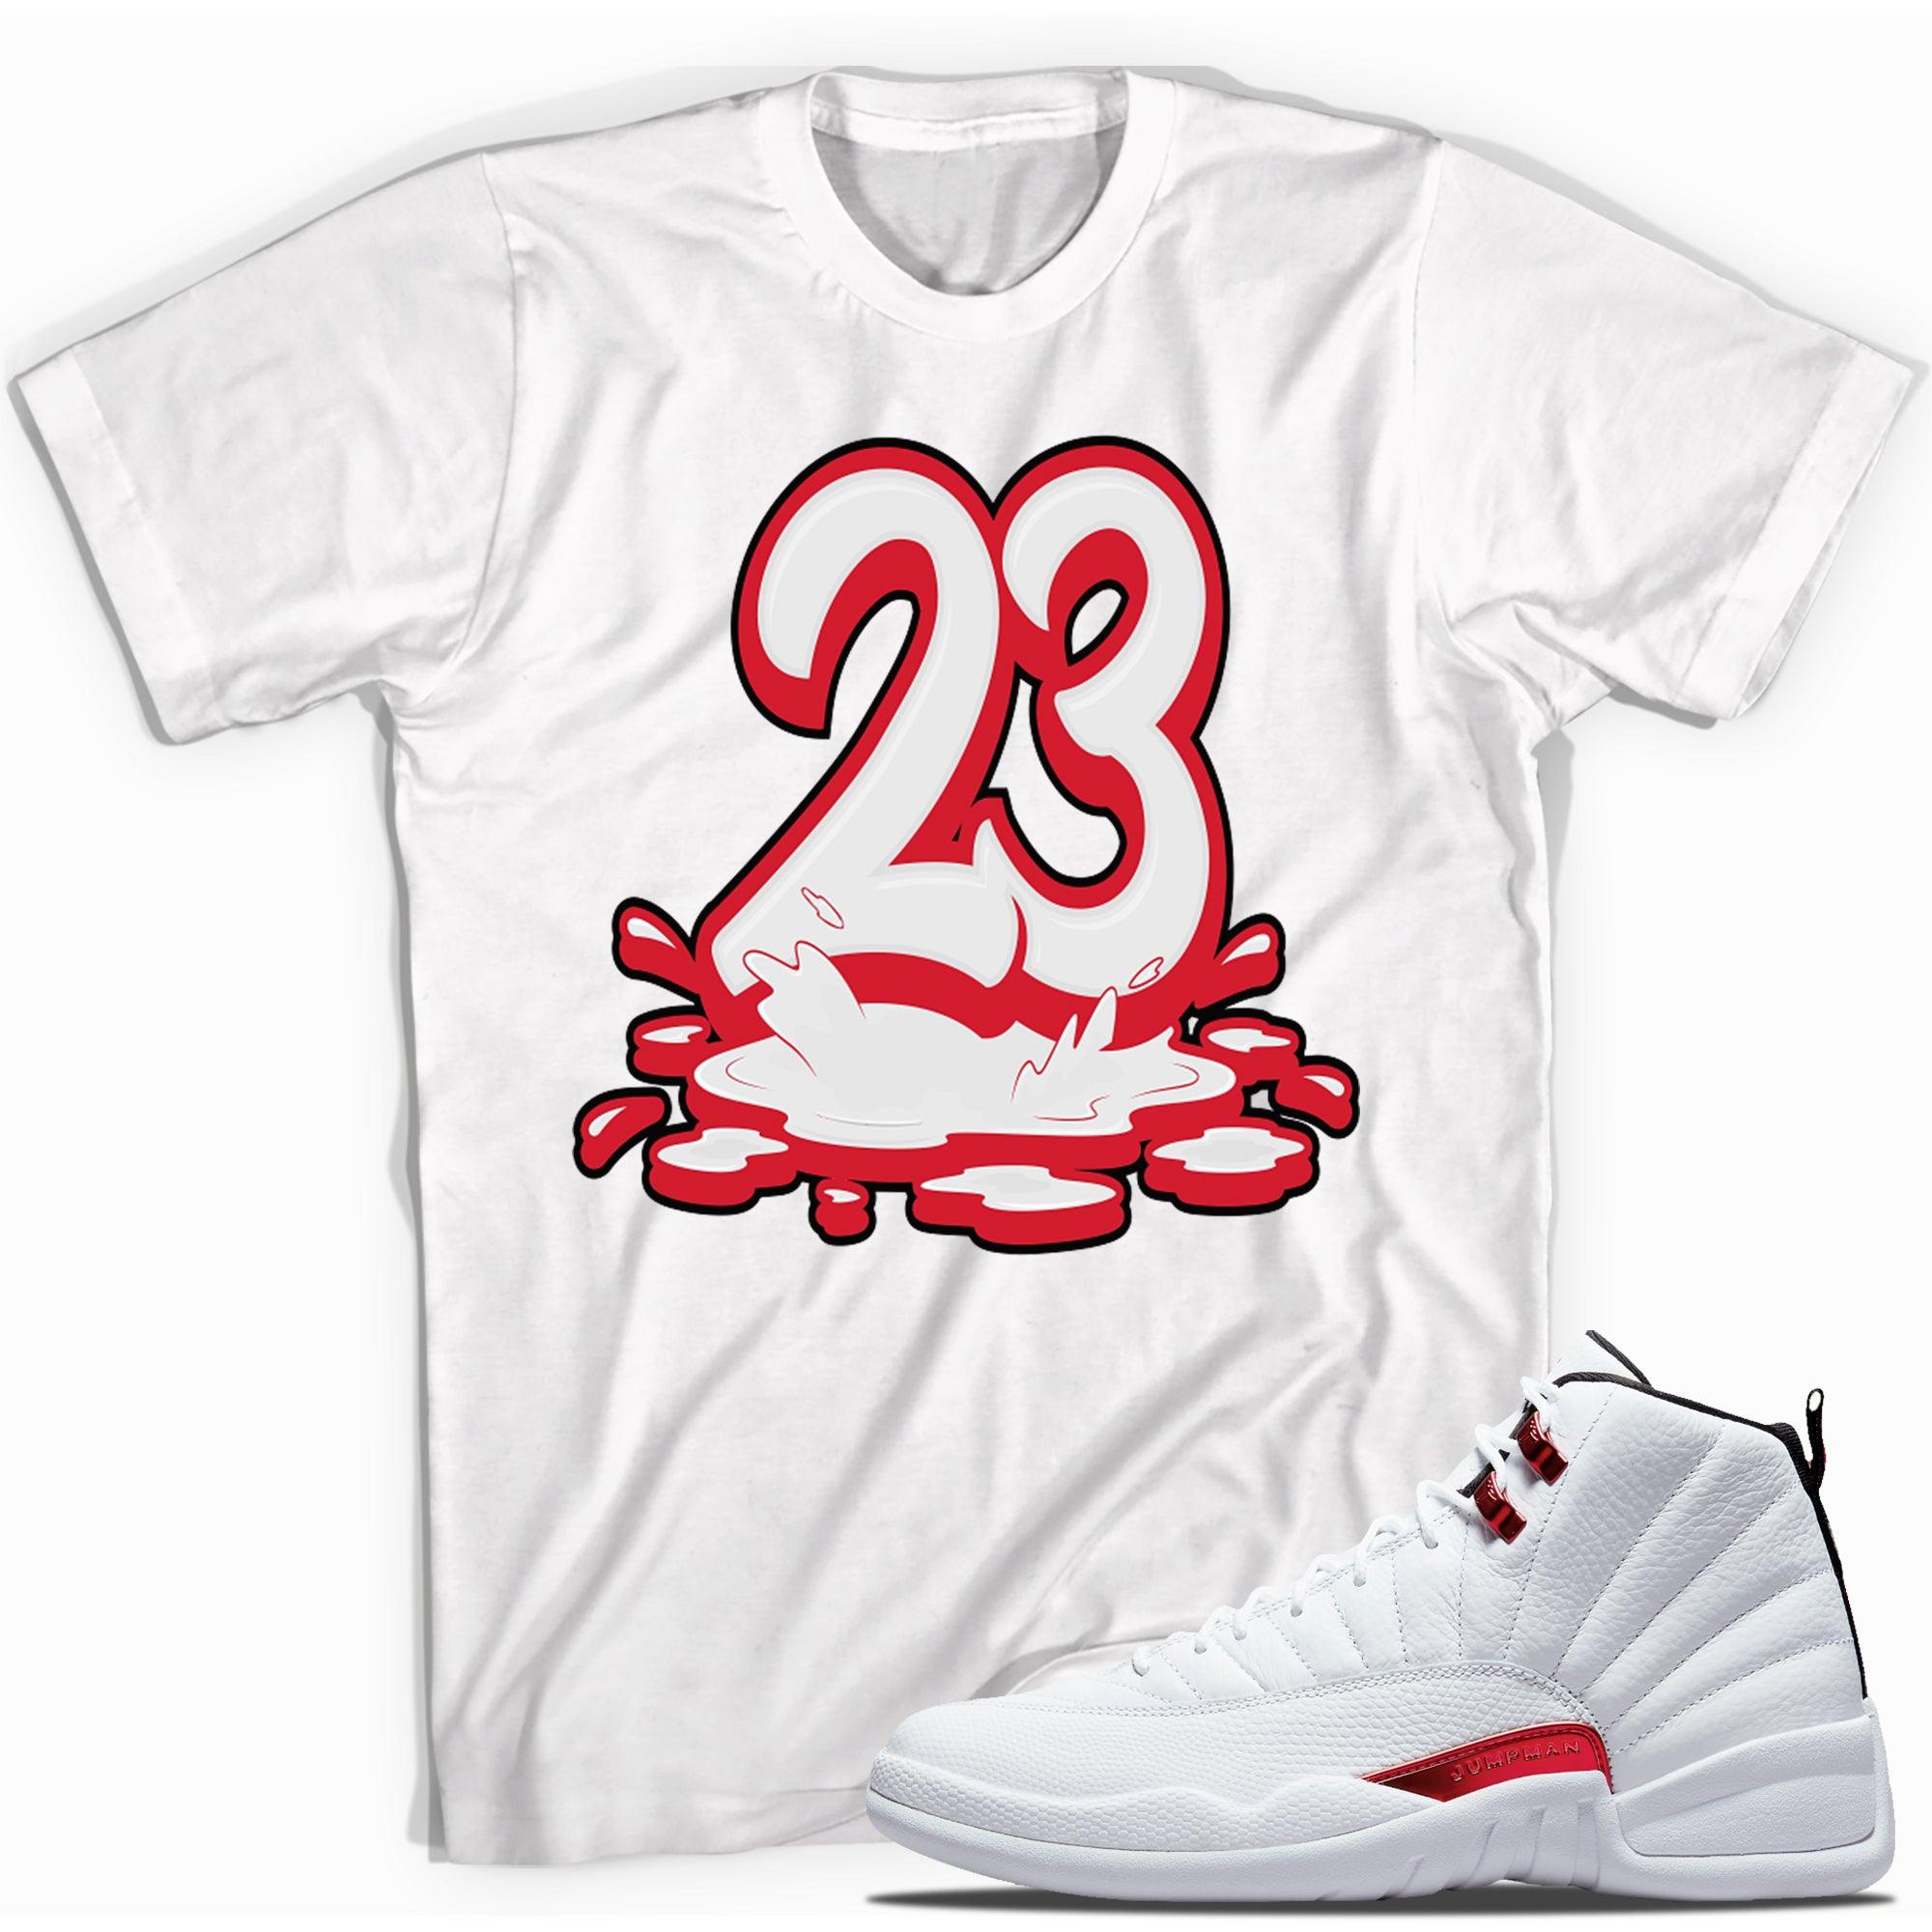 Number 23 Melting Shirt Air Jordan 12 Twist photo